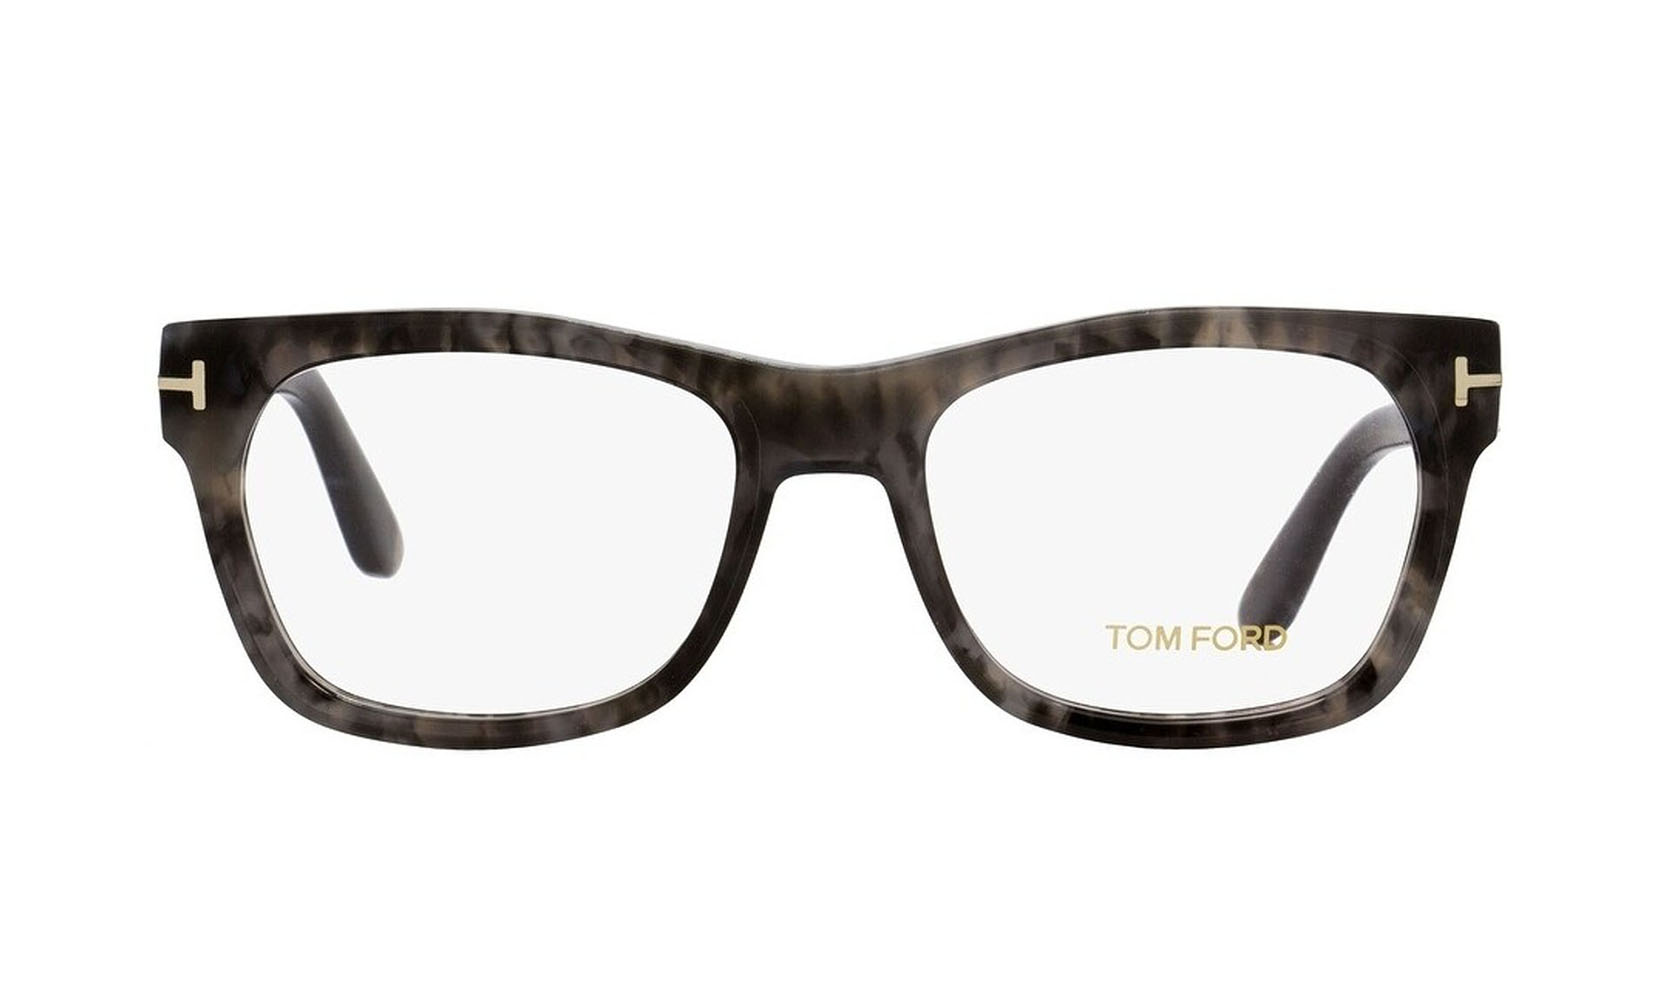 Tom Ford 5468 056 Charcoal Gray Havana Eyeglasses TF5468 056 55mm - image 2 of 2